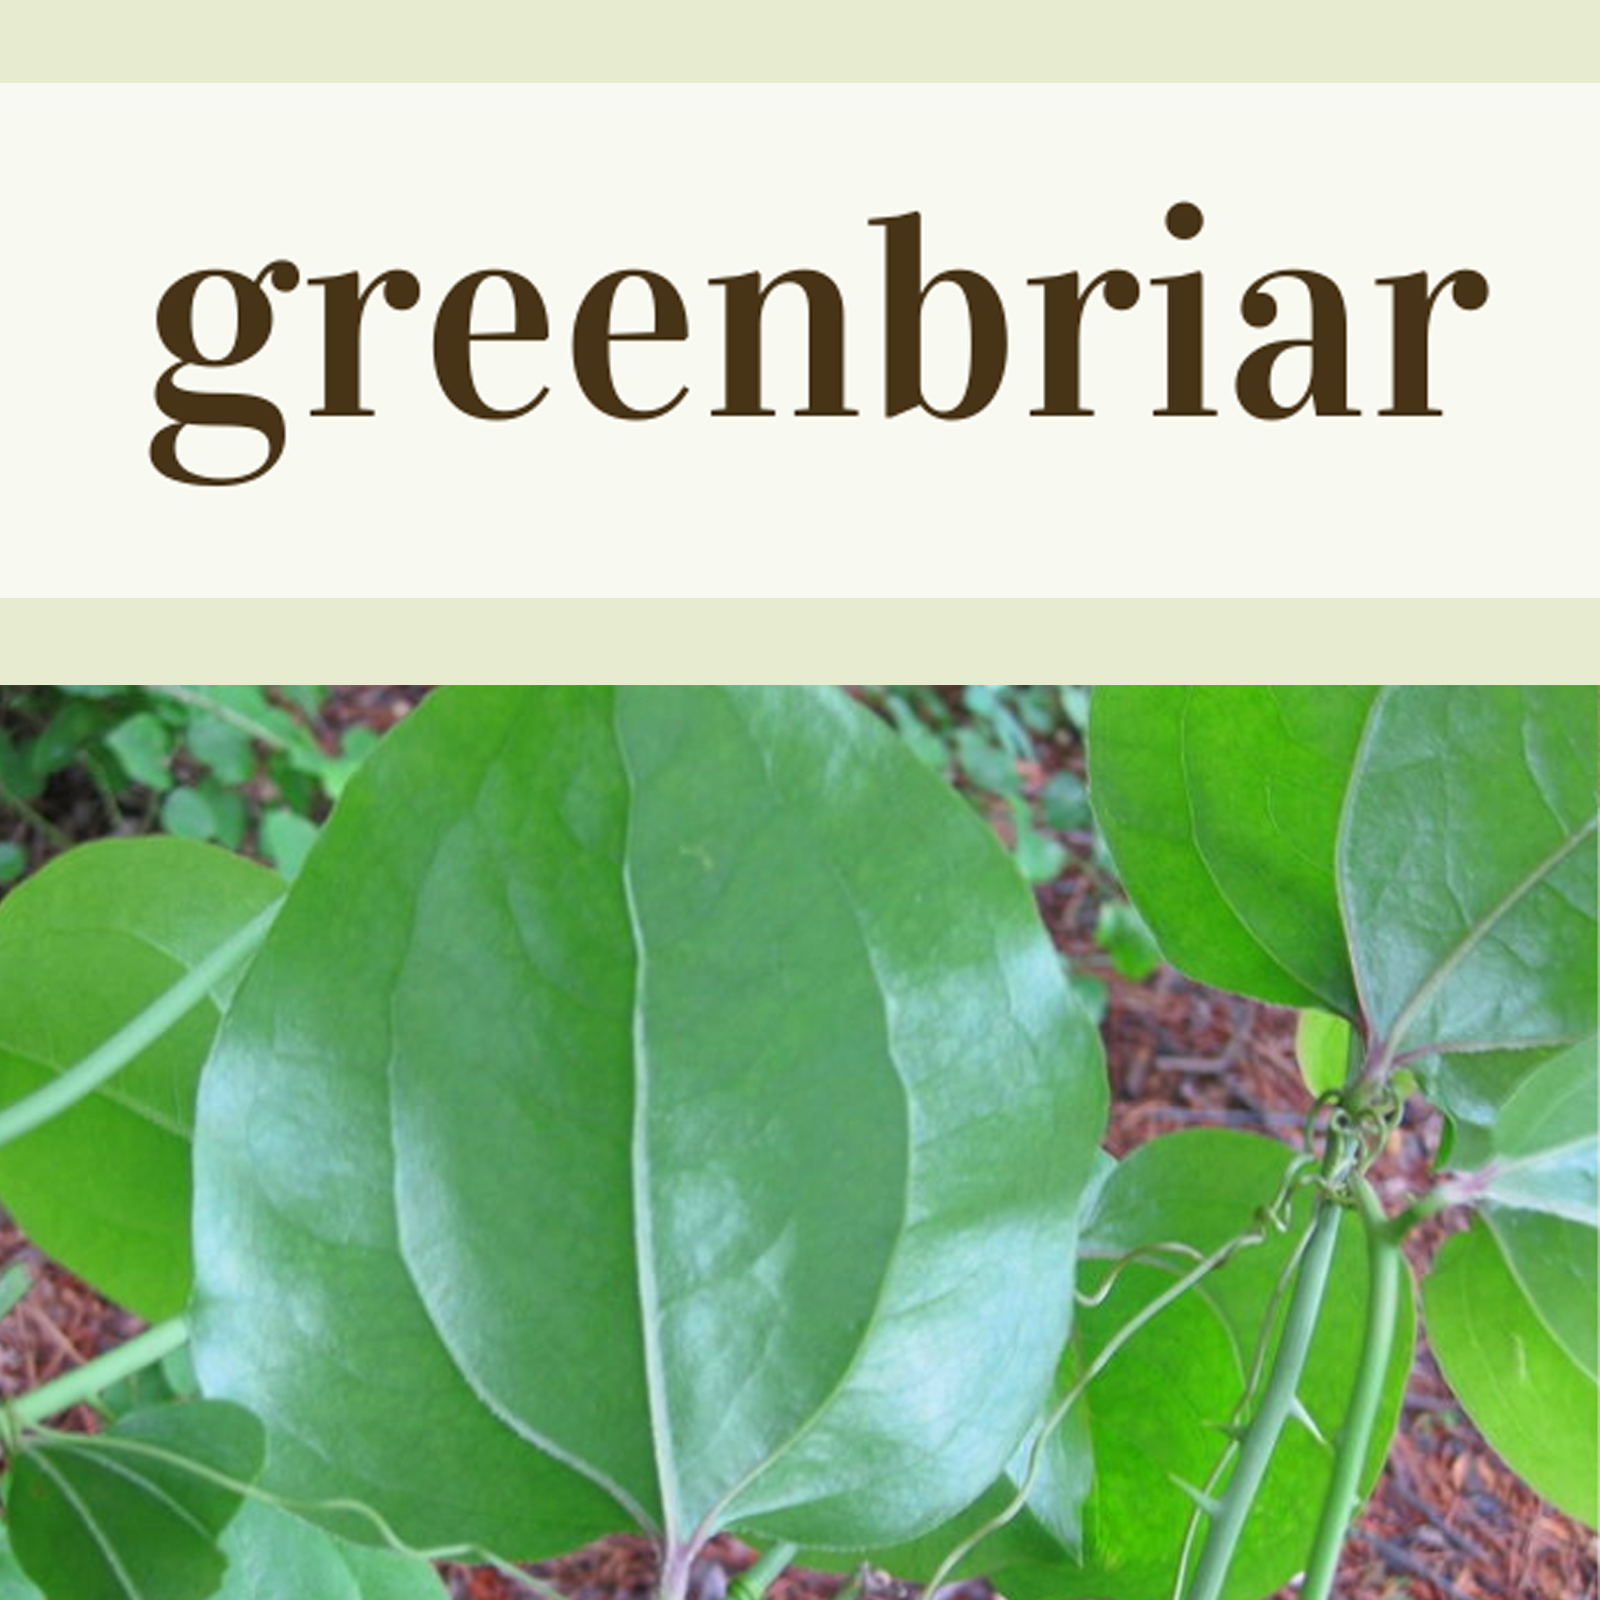 greenbriar